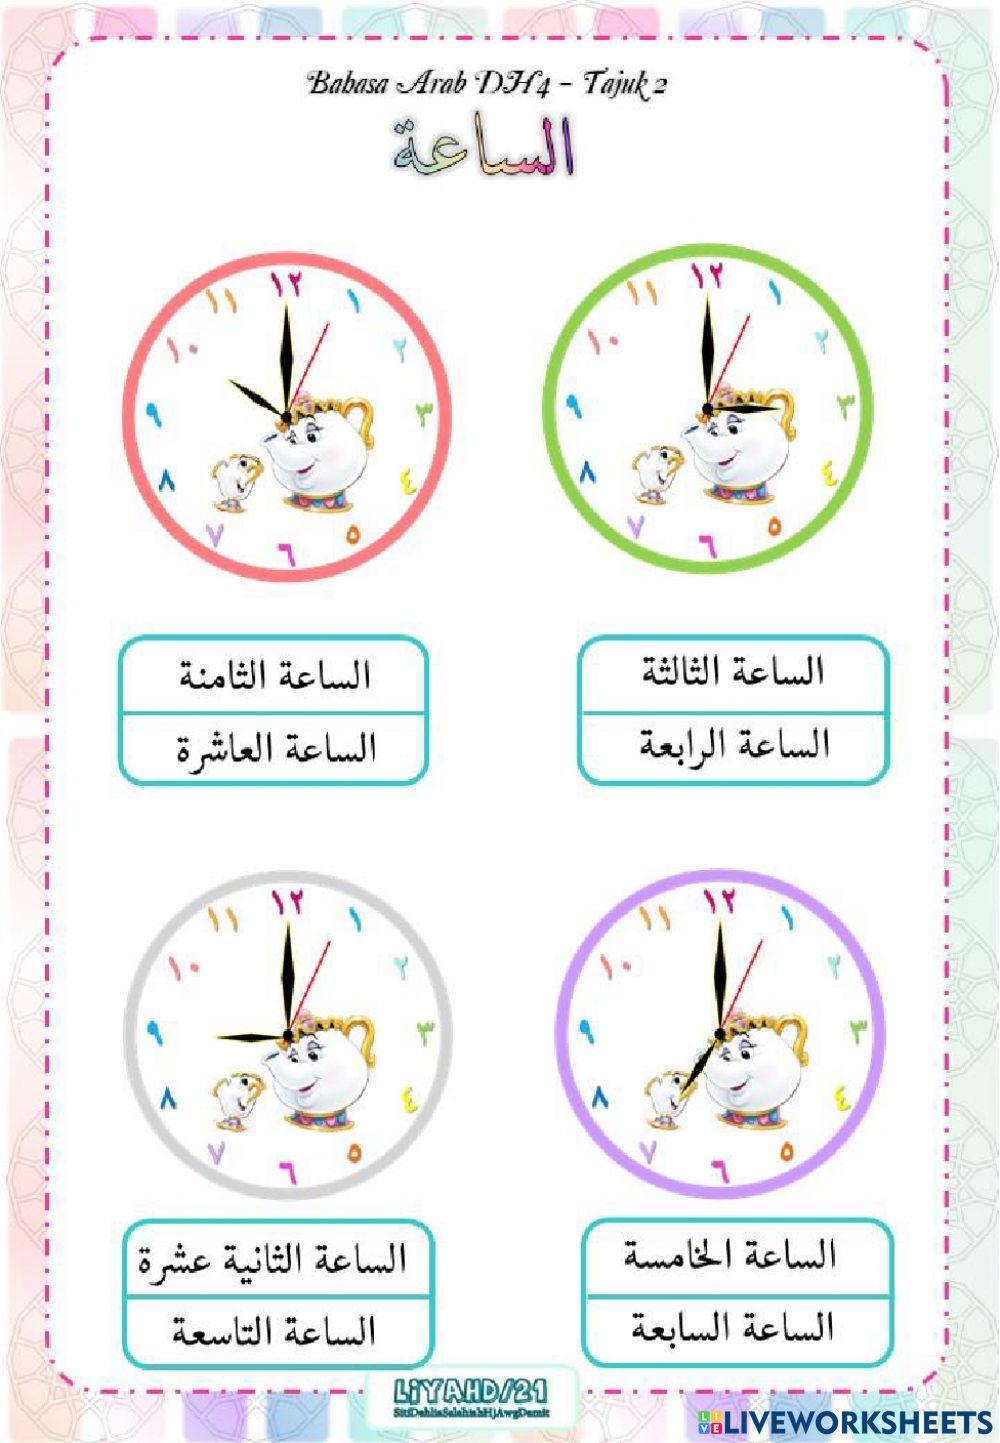 Latihan Bahasa Arab DH4 T2